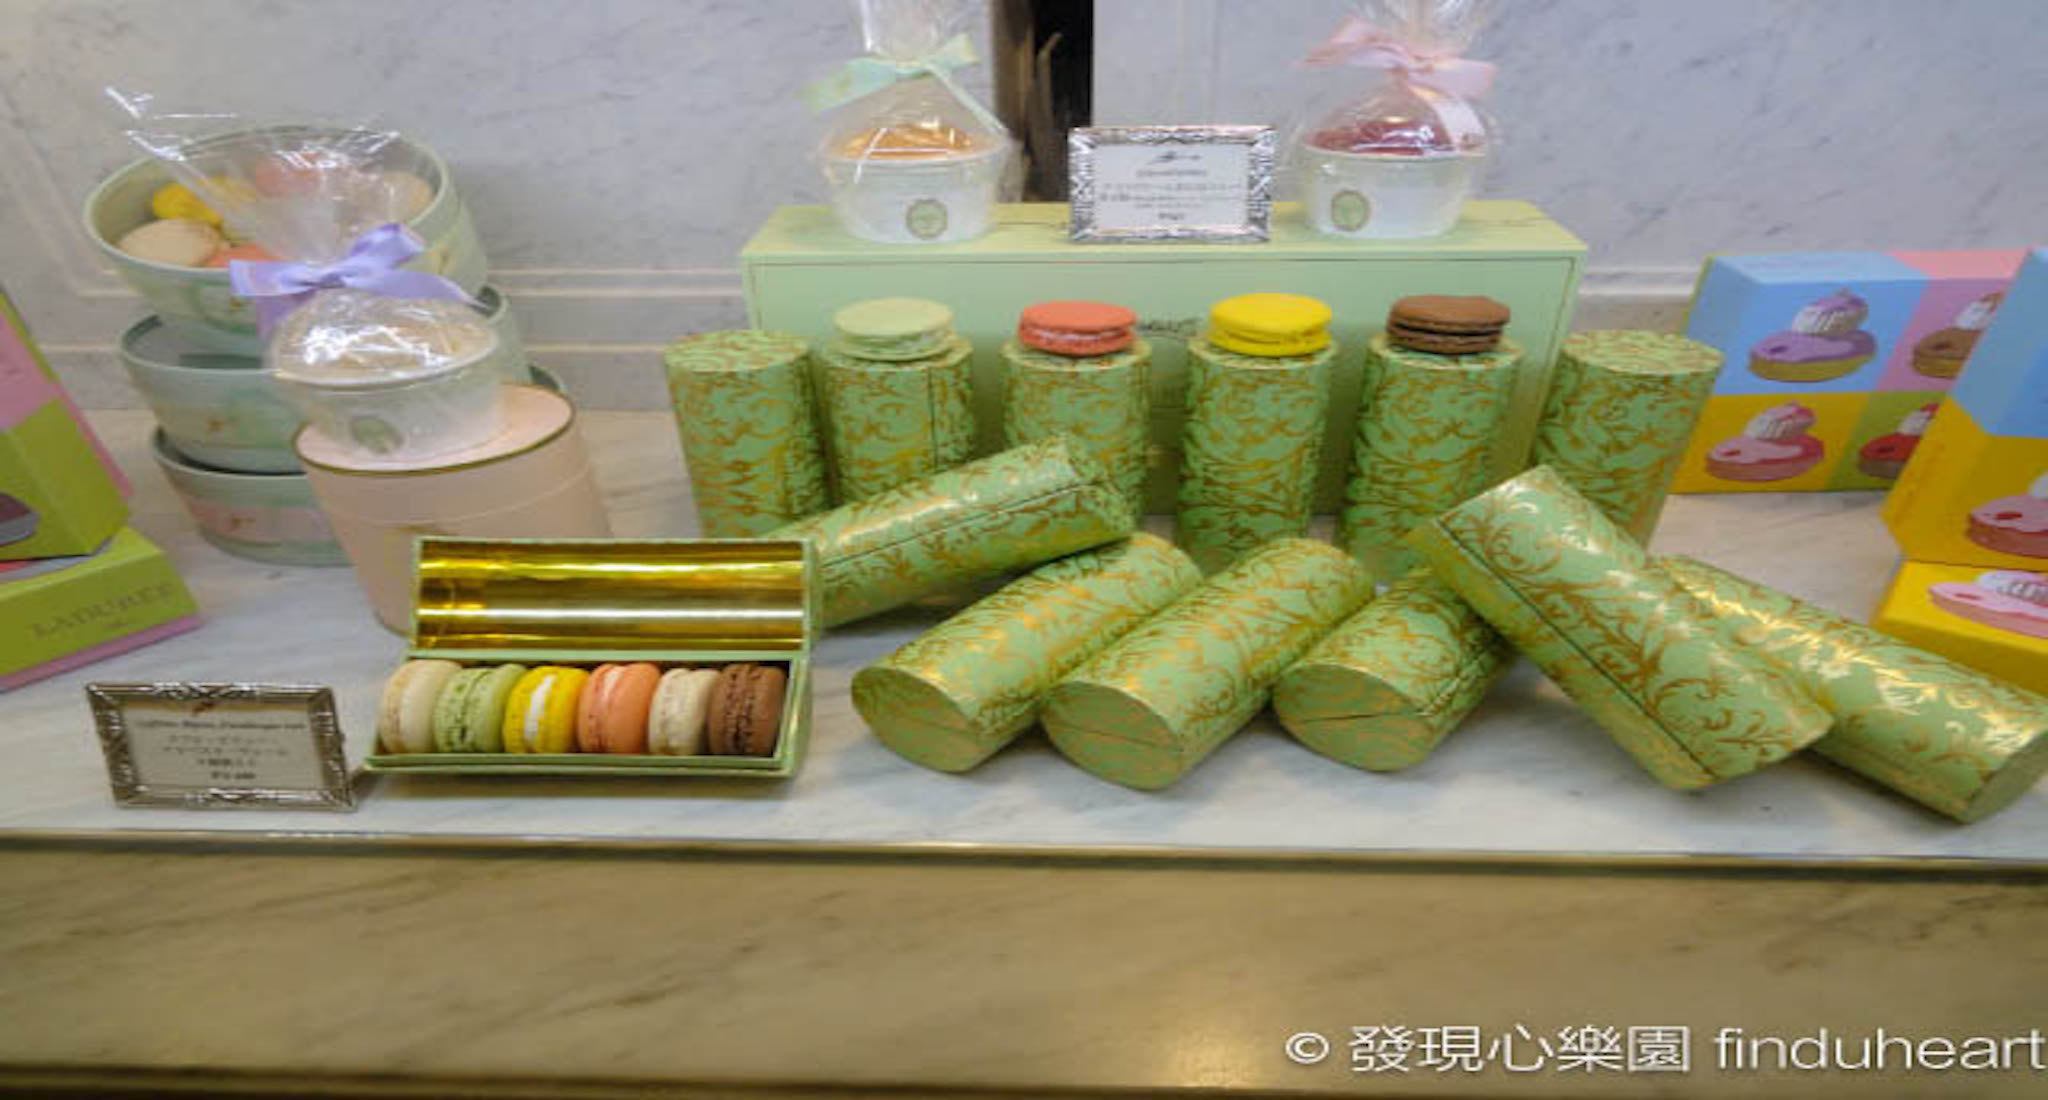 Laduree Salon de the - 銀座：法國百年馬卡龍甜點蛋糕名店